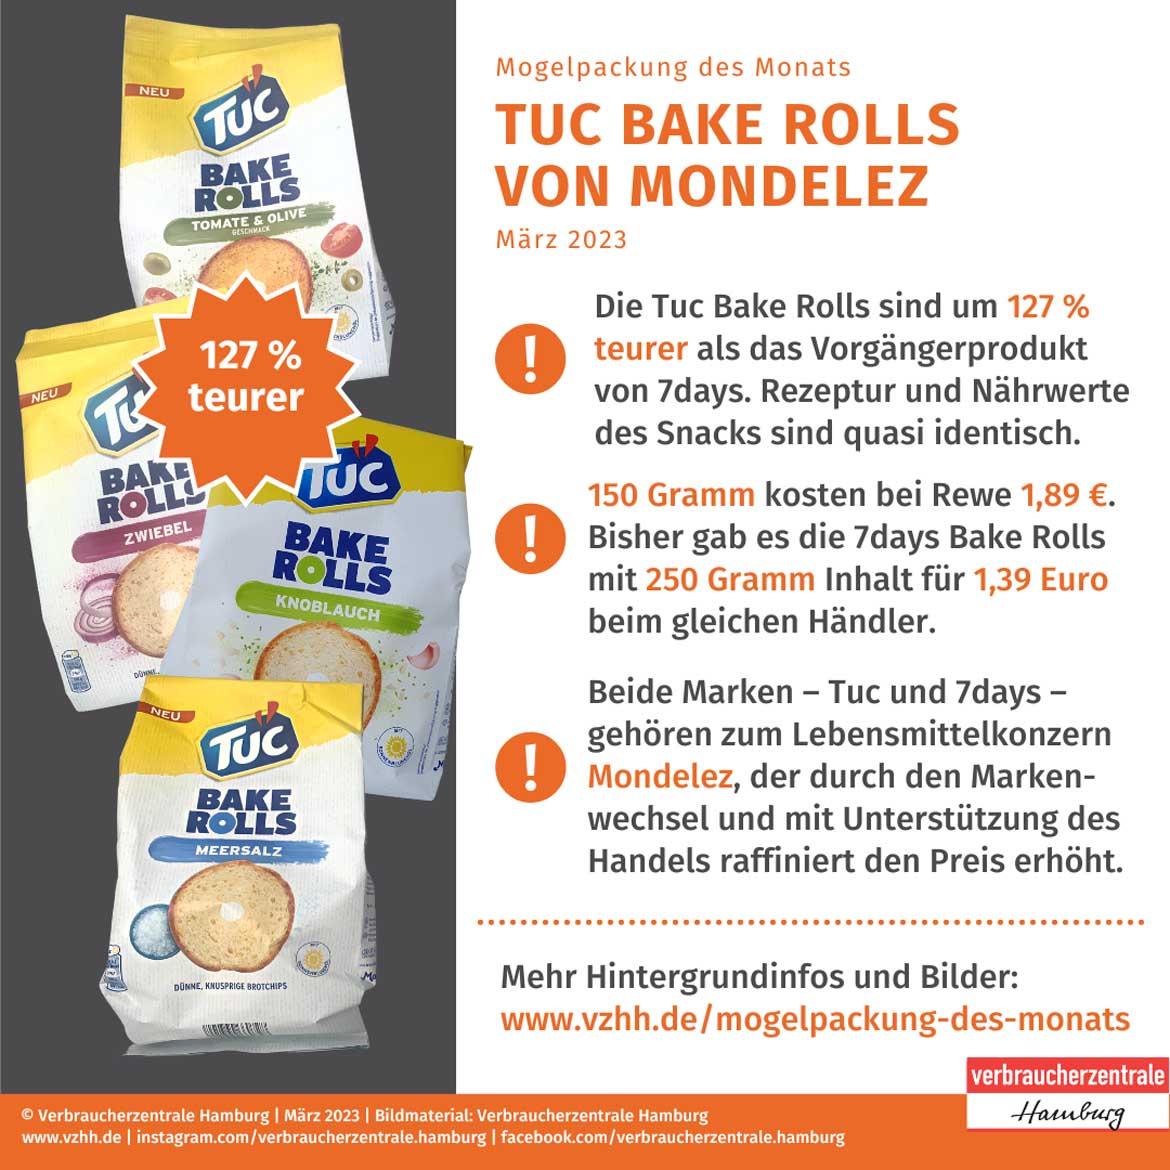 Facebook-Post zur Mogelpackung des Monats Tuc Bake Rolls